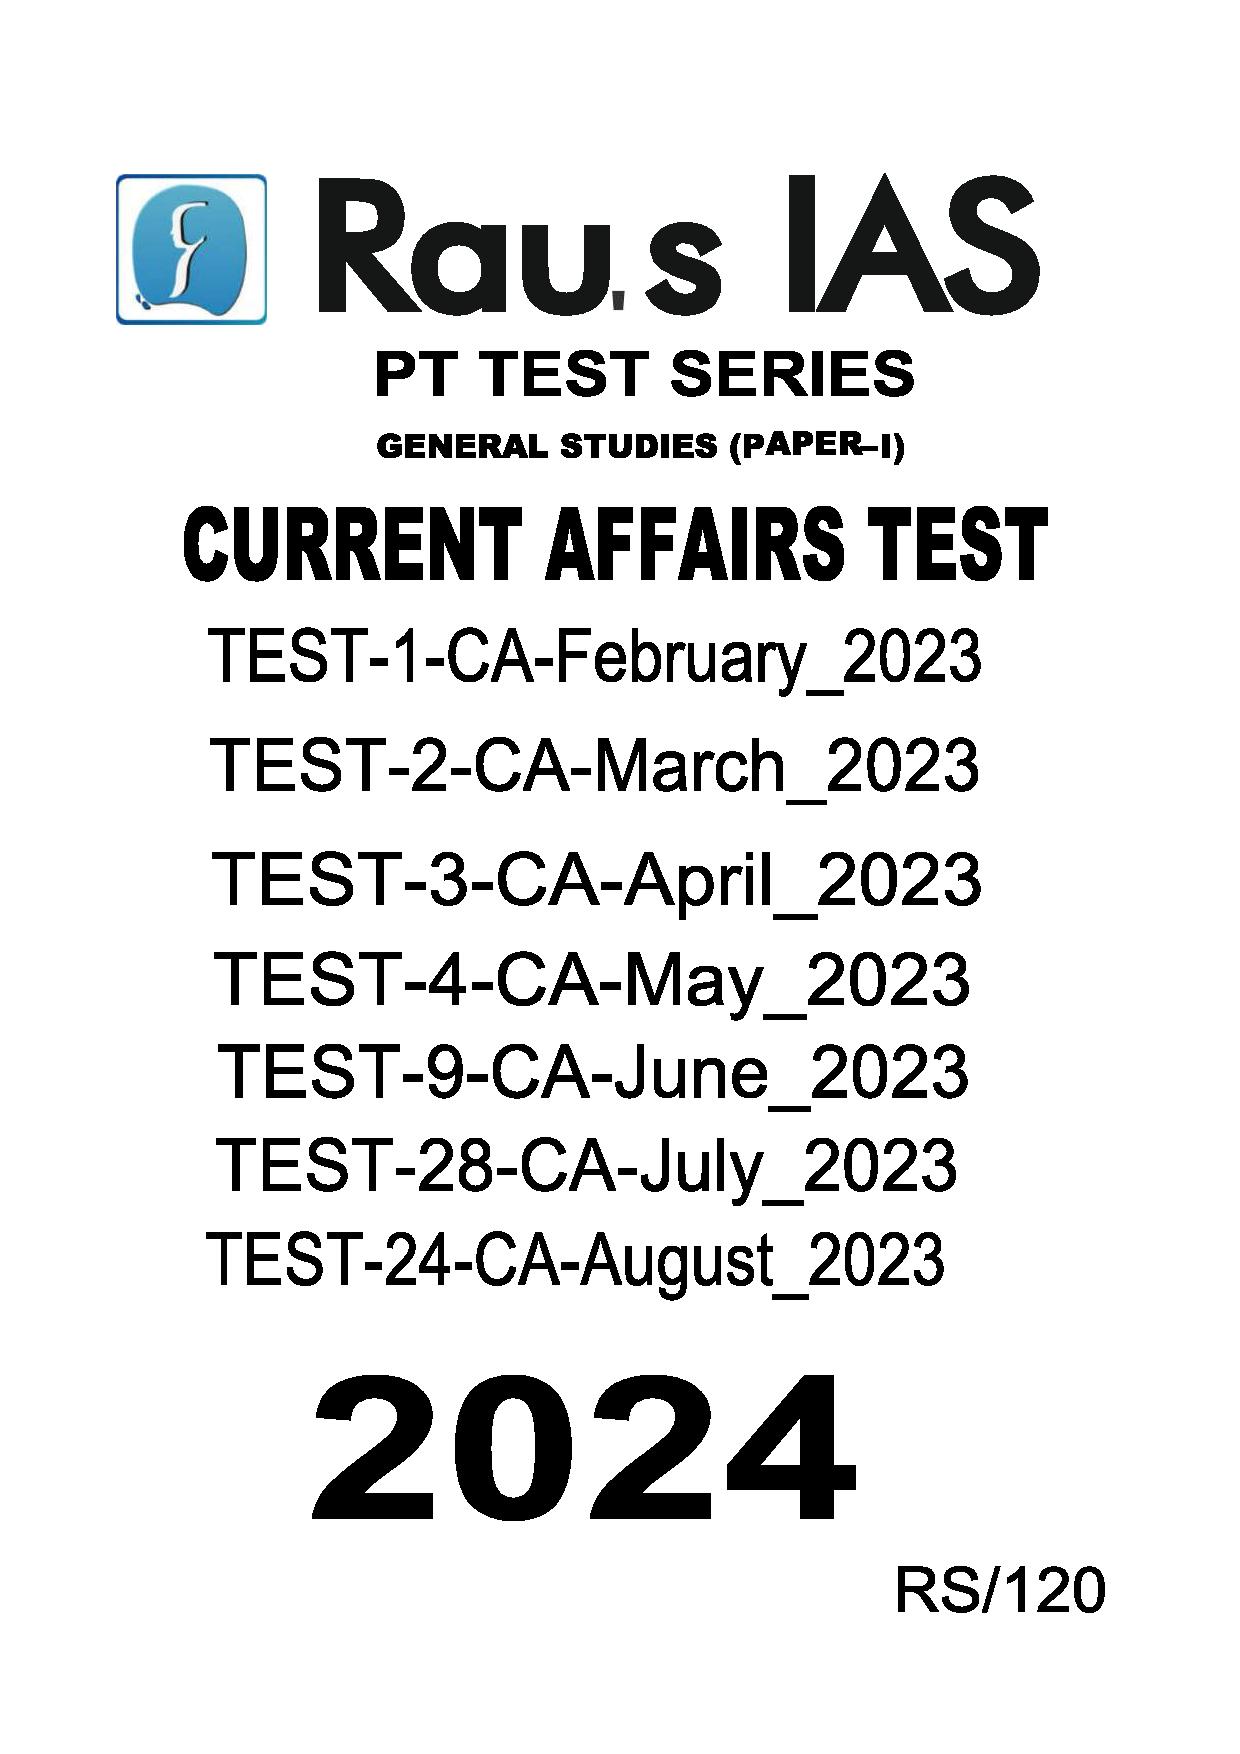 Manufacturer, Exporter, Importer, Supplier, Wholesaler, Retailer, Trader of RAU,S IAS PRELIMS TEST SERIES GENERAL STUDIES (PAPER-1) 2024 CURRENT AFFAIRS TEST-2024 TEST-1-CA-Feb-Test-2-CA-Mar-Test-3-CA-Apr-Test-4-CA-May-Test-9-CA-Jun-Test-28-CA-Jul-Test-24-CA-Aug-2023 English Medium (Black & White) in New Delhi, Delhi, India.